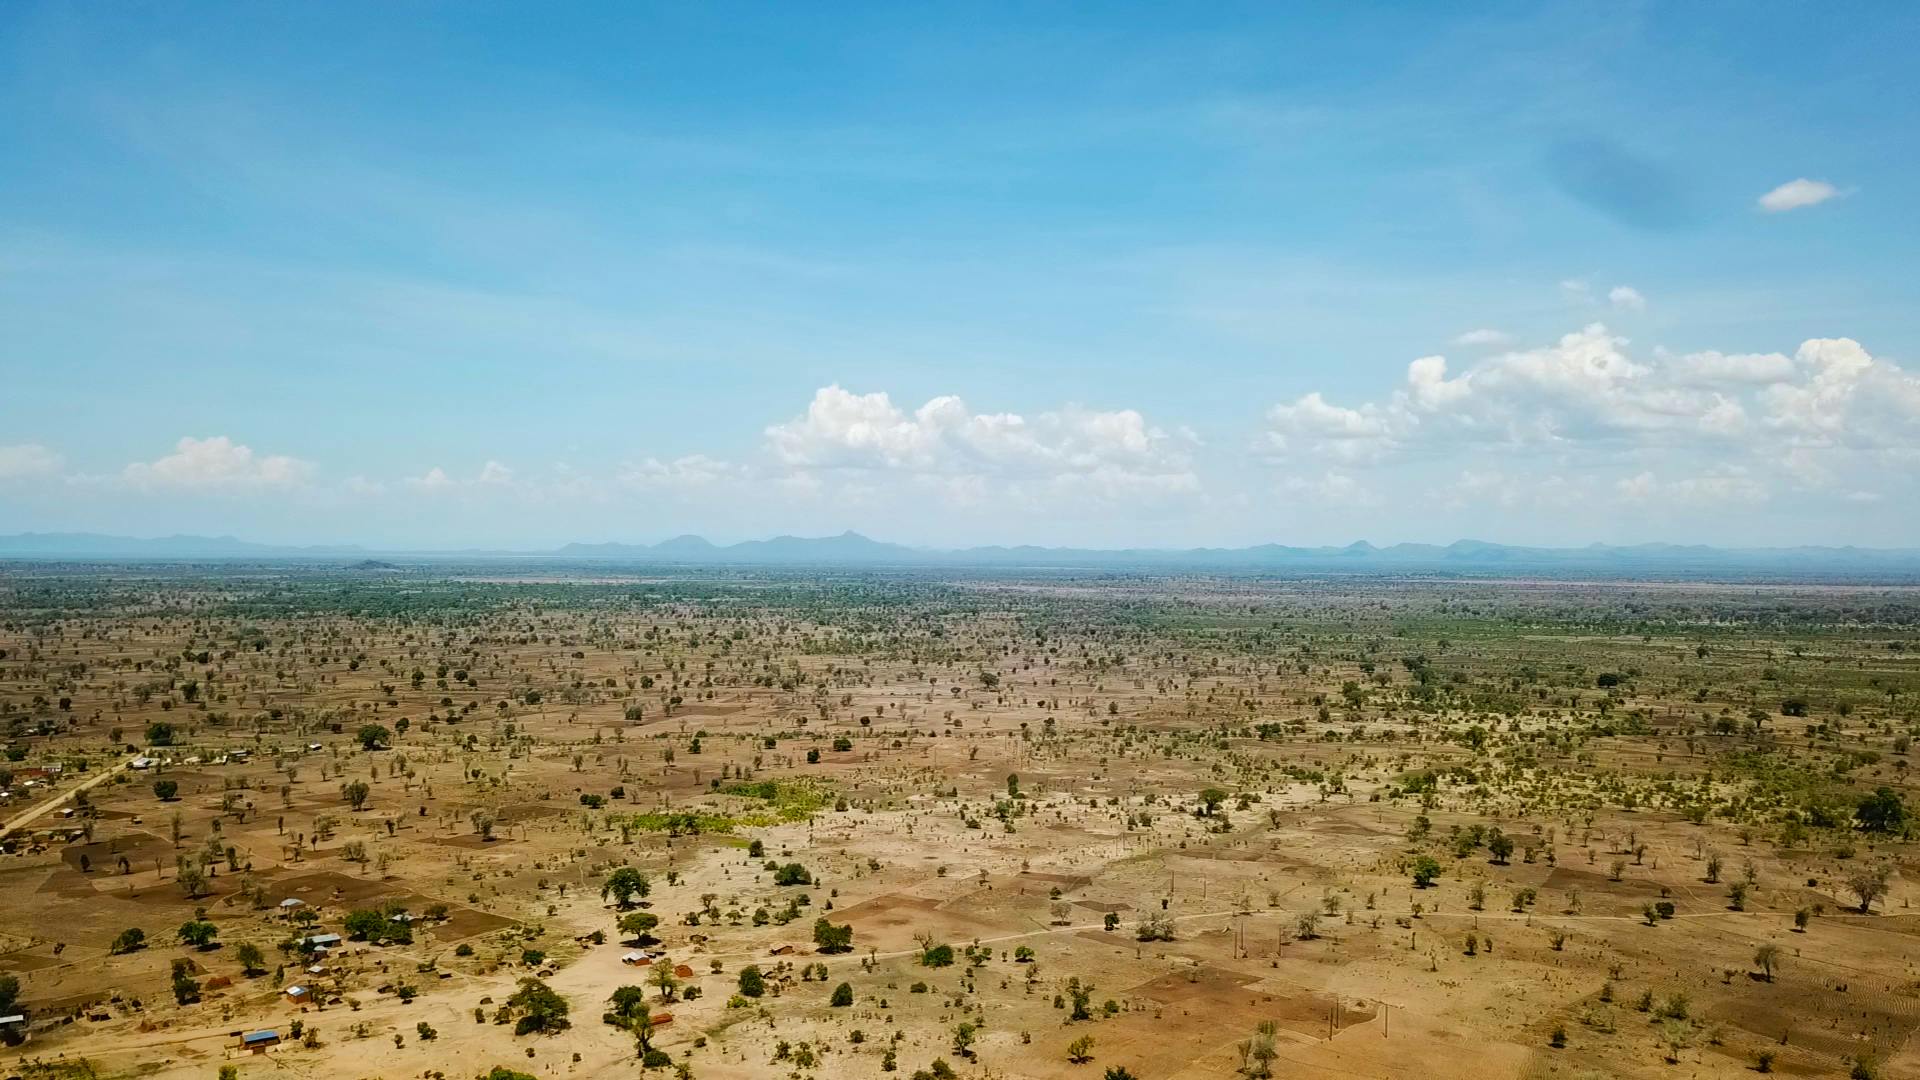 Arid landscape in Africa